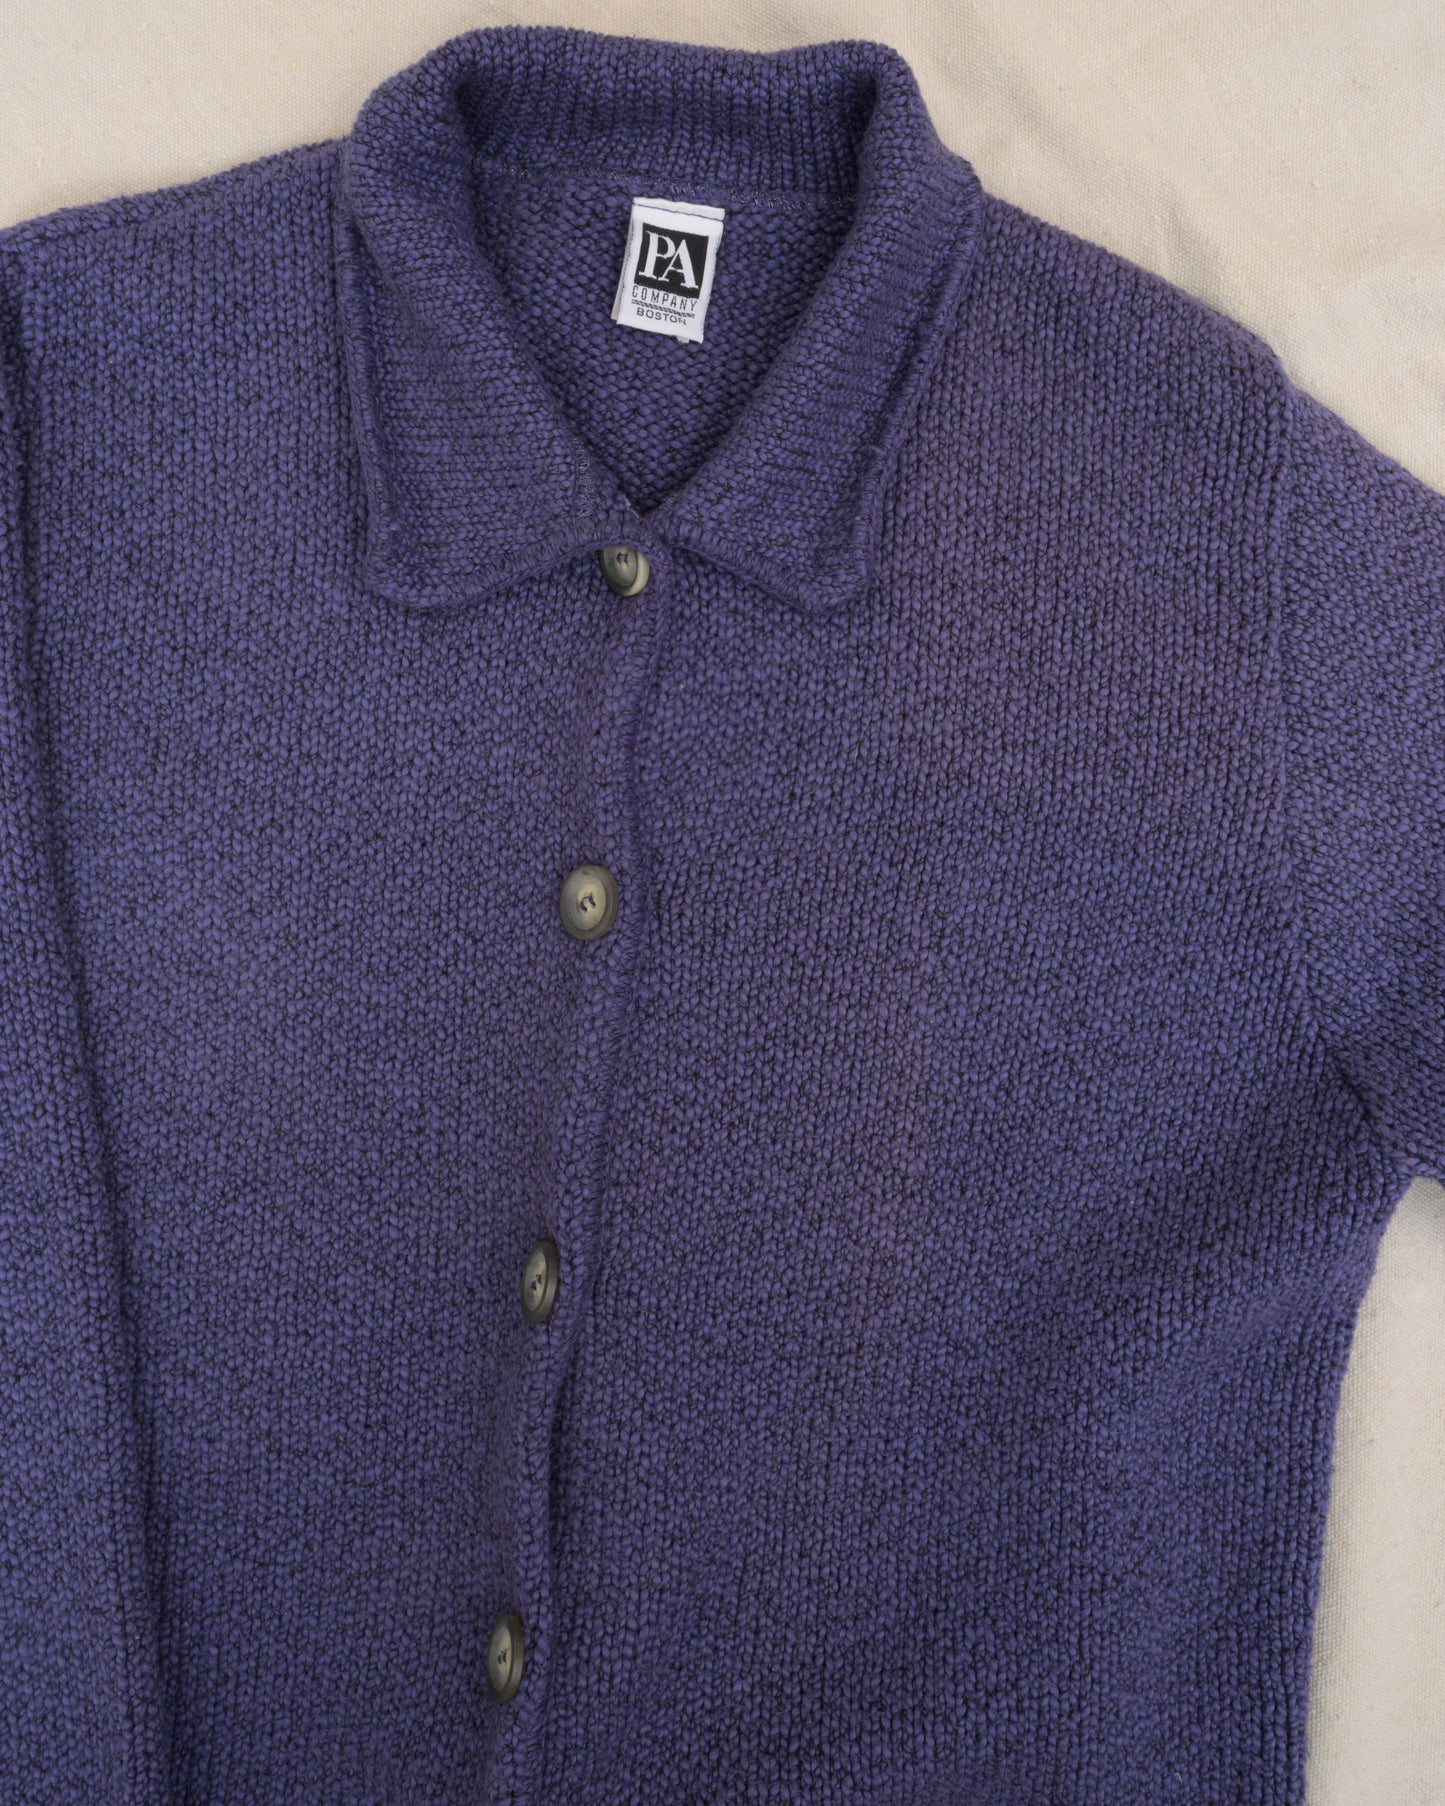 Vintage Lavender Knit Cardigan (S/M)